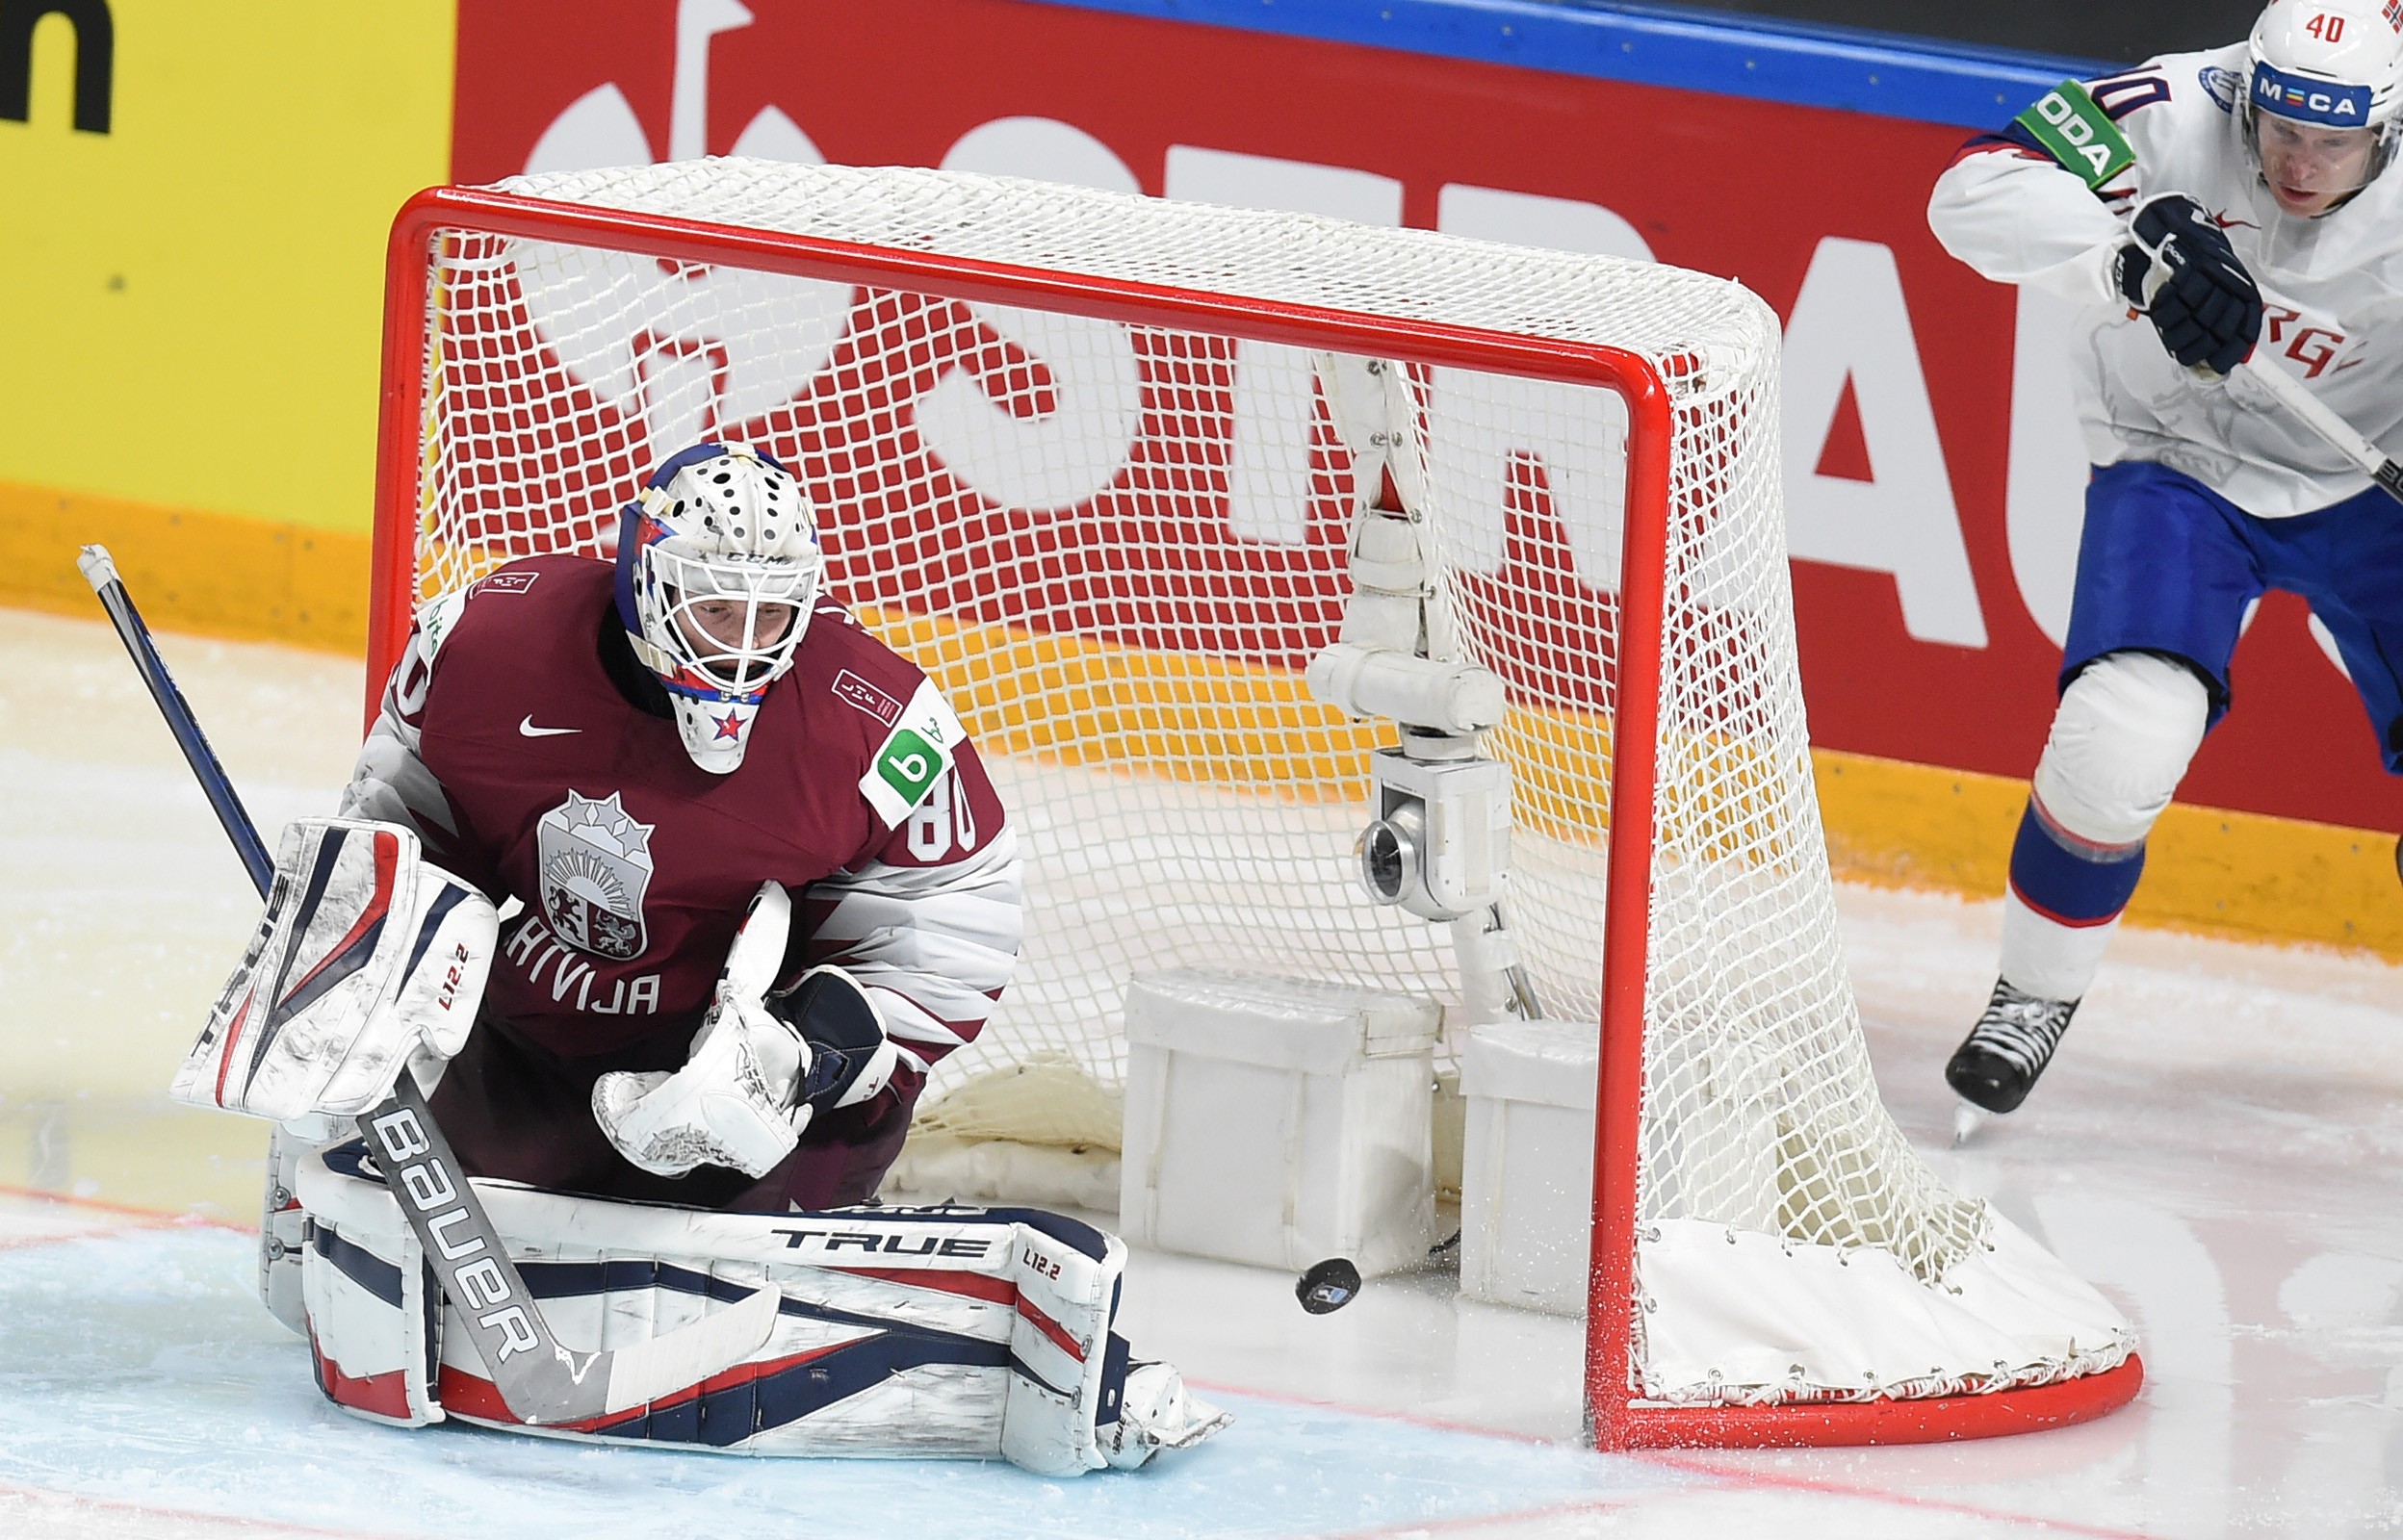 Latvia's goalkeeper Matiss Kivlenieks tries to make a save.